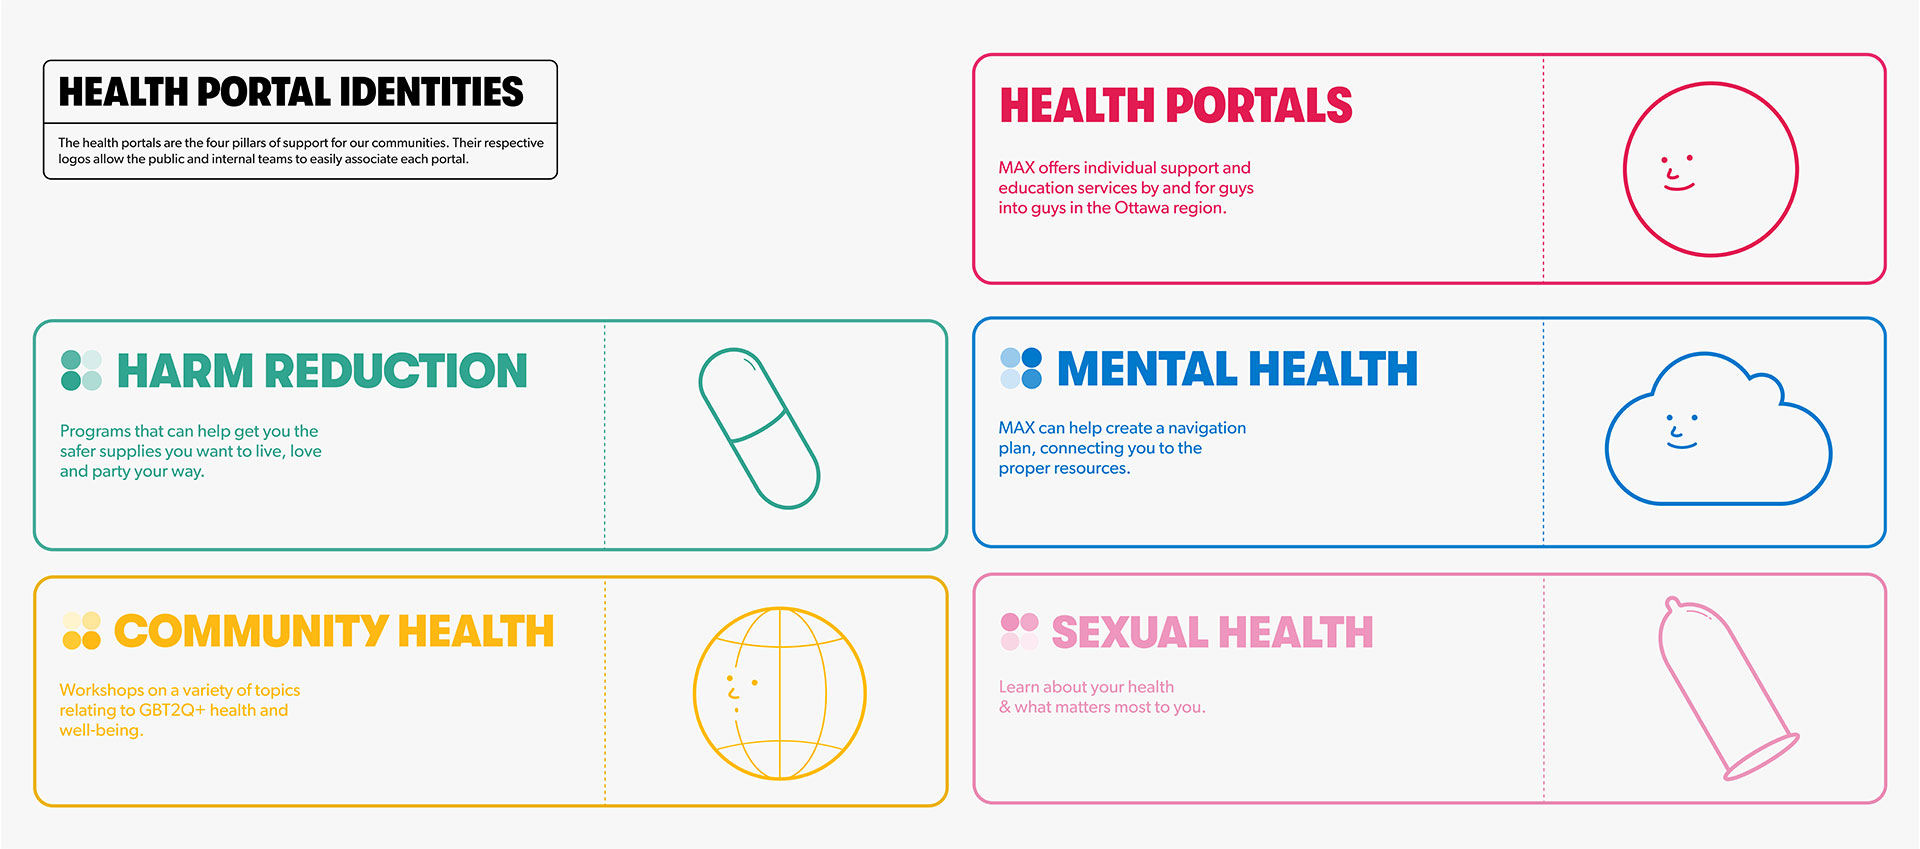 Portfolio image that displays health portal identities